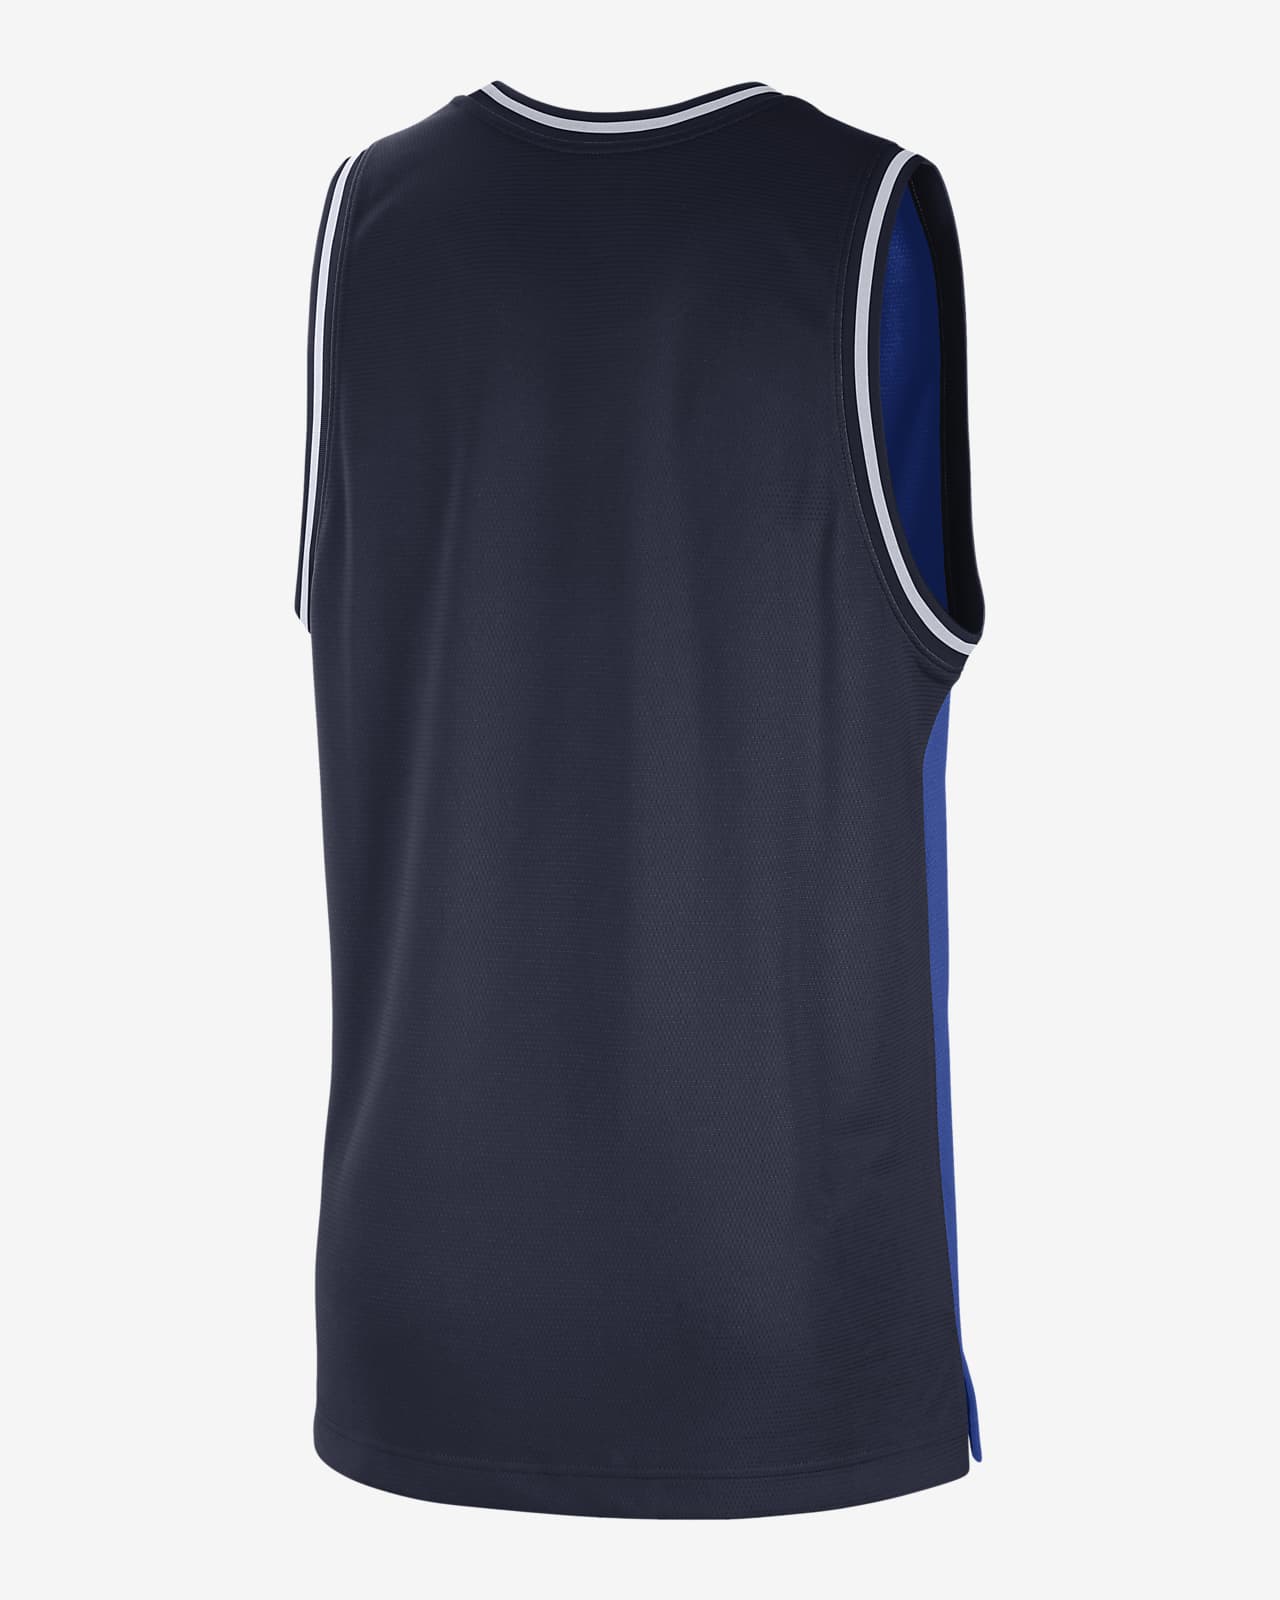 Nike Dallas Mavericks NBA Warm Up Jacket Pants Suit Men's XL